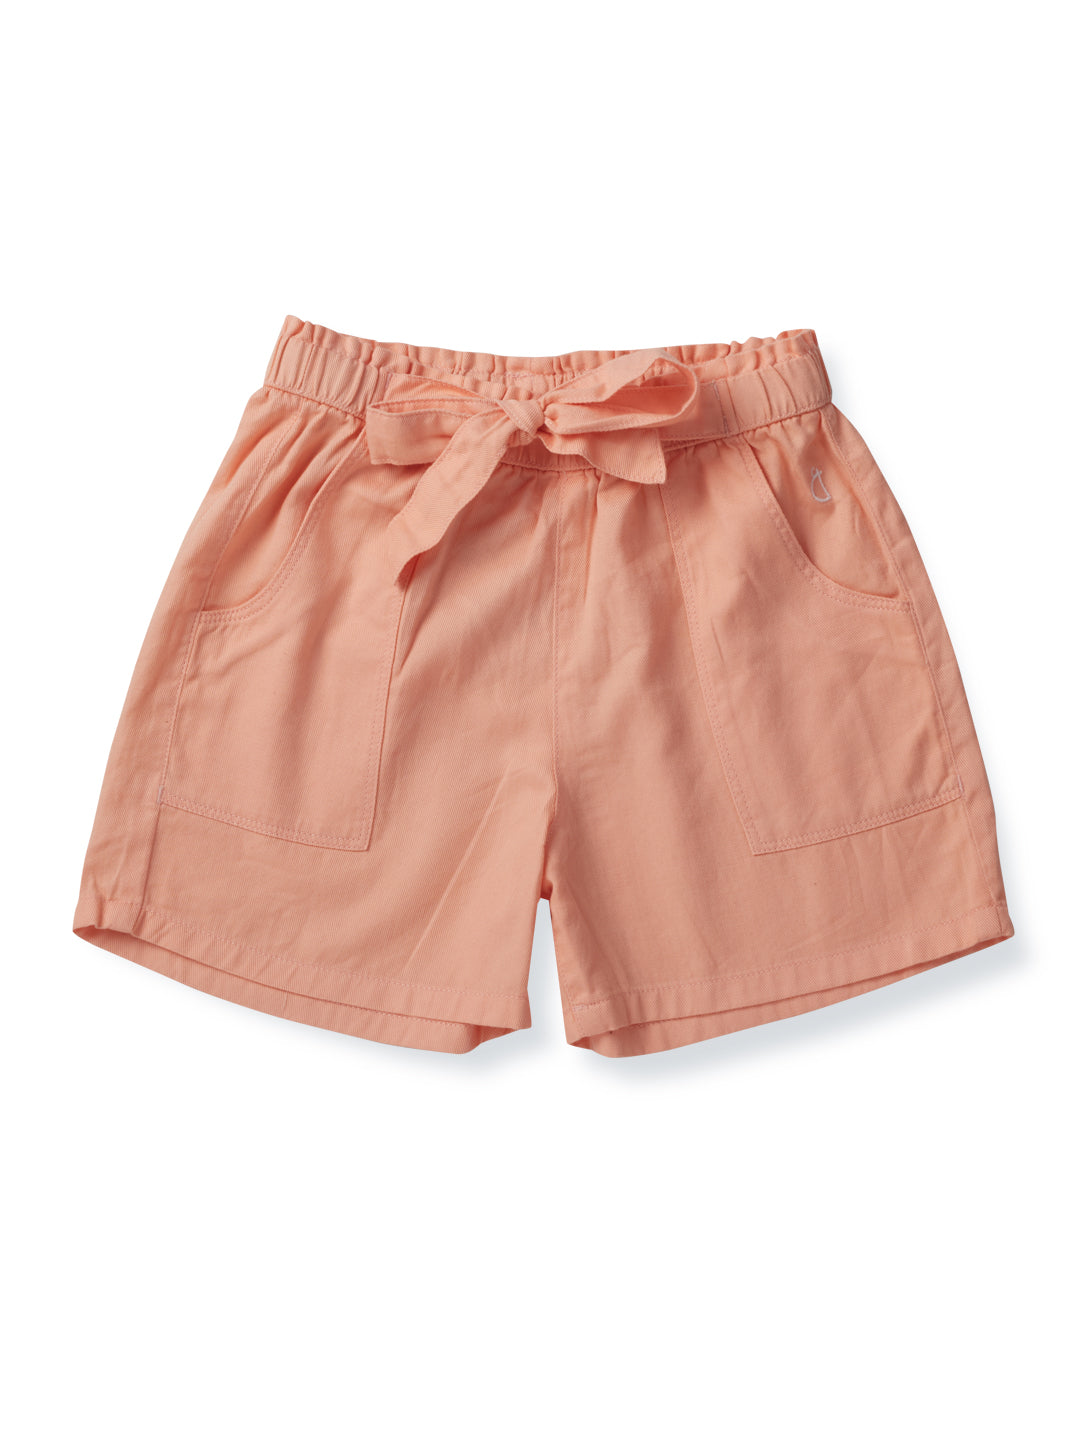 Girls Peach Cotton Solid Shorts